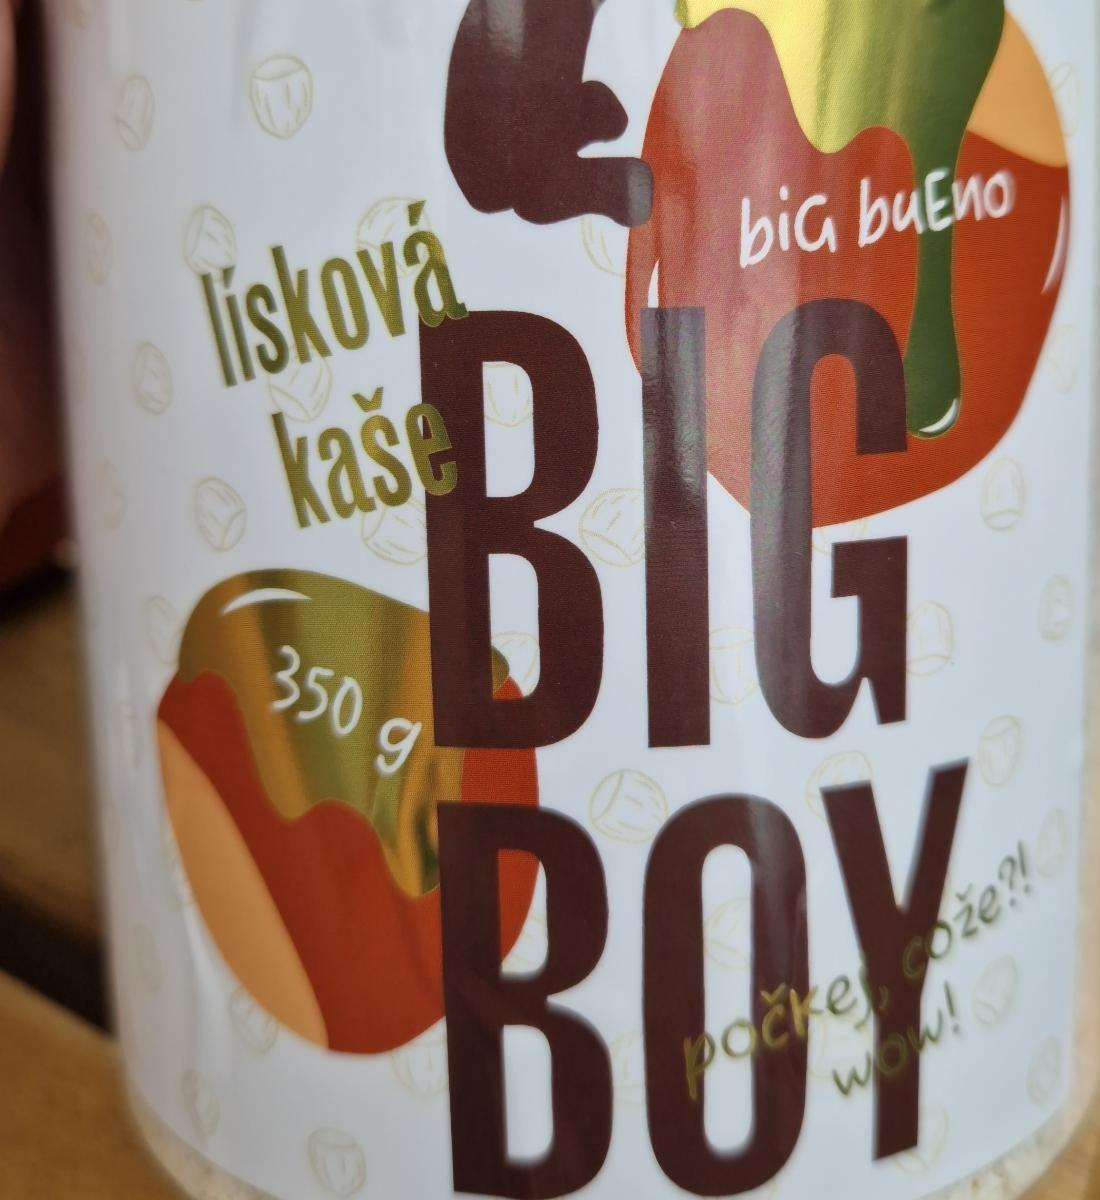 Fotografie - Lísková kaše Big Bueno Big Boy